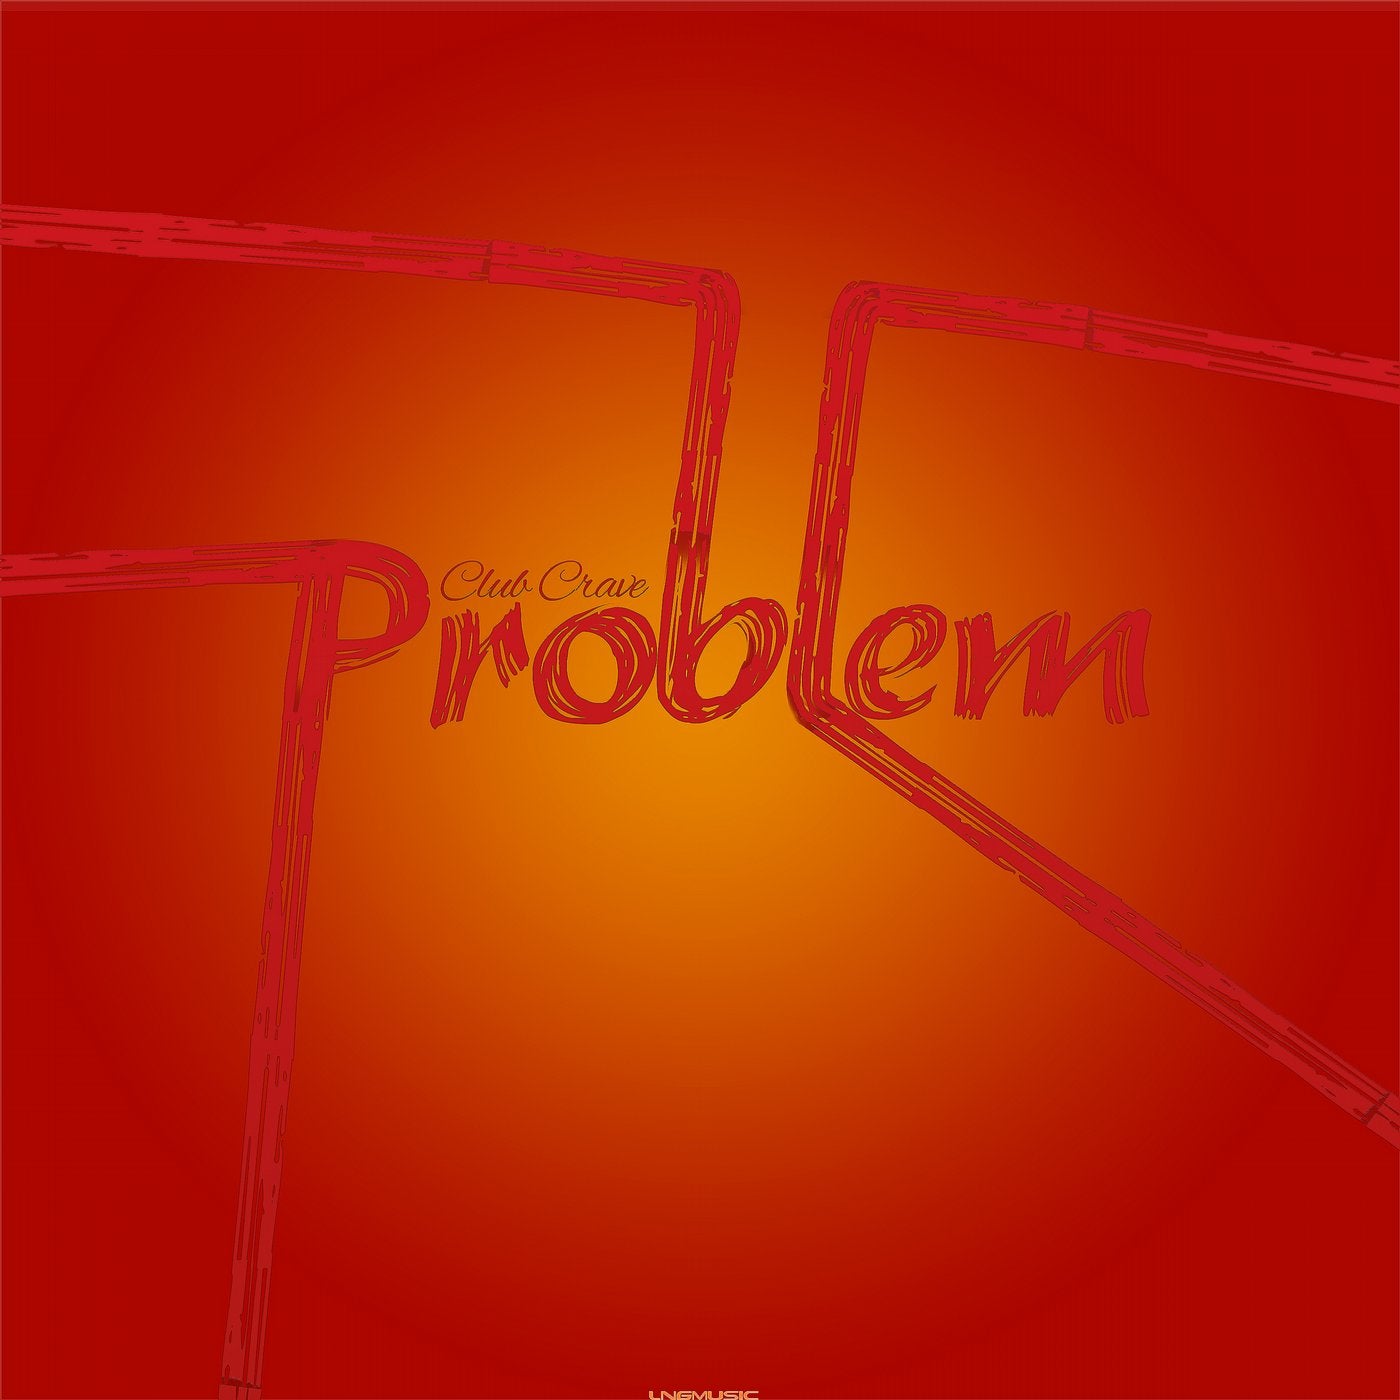 Problem